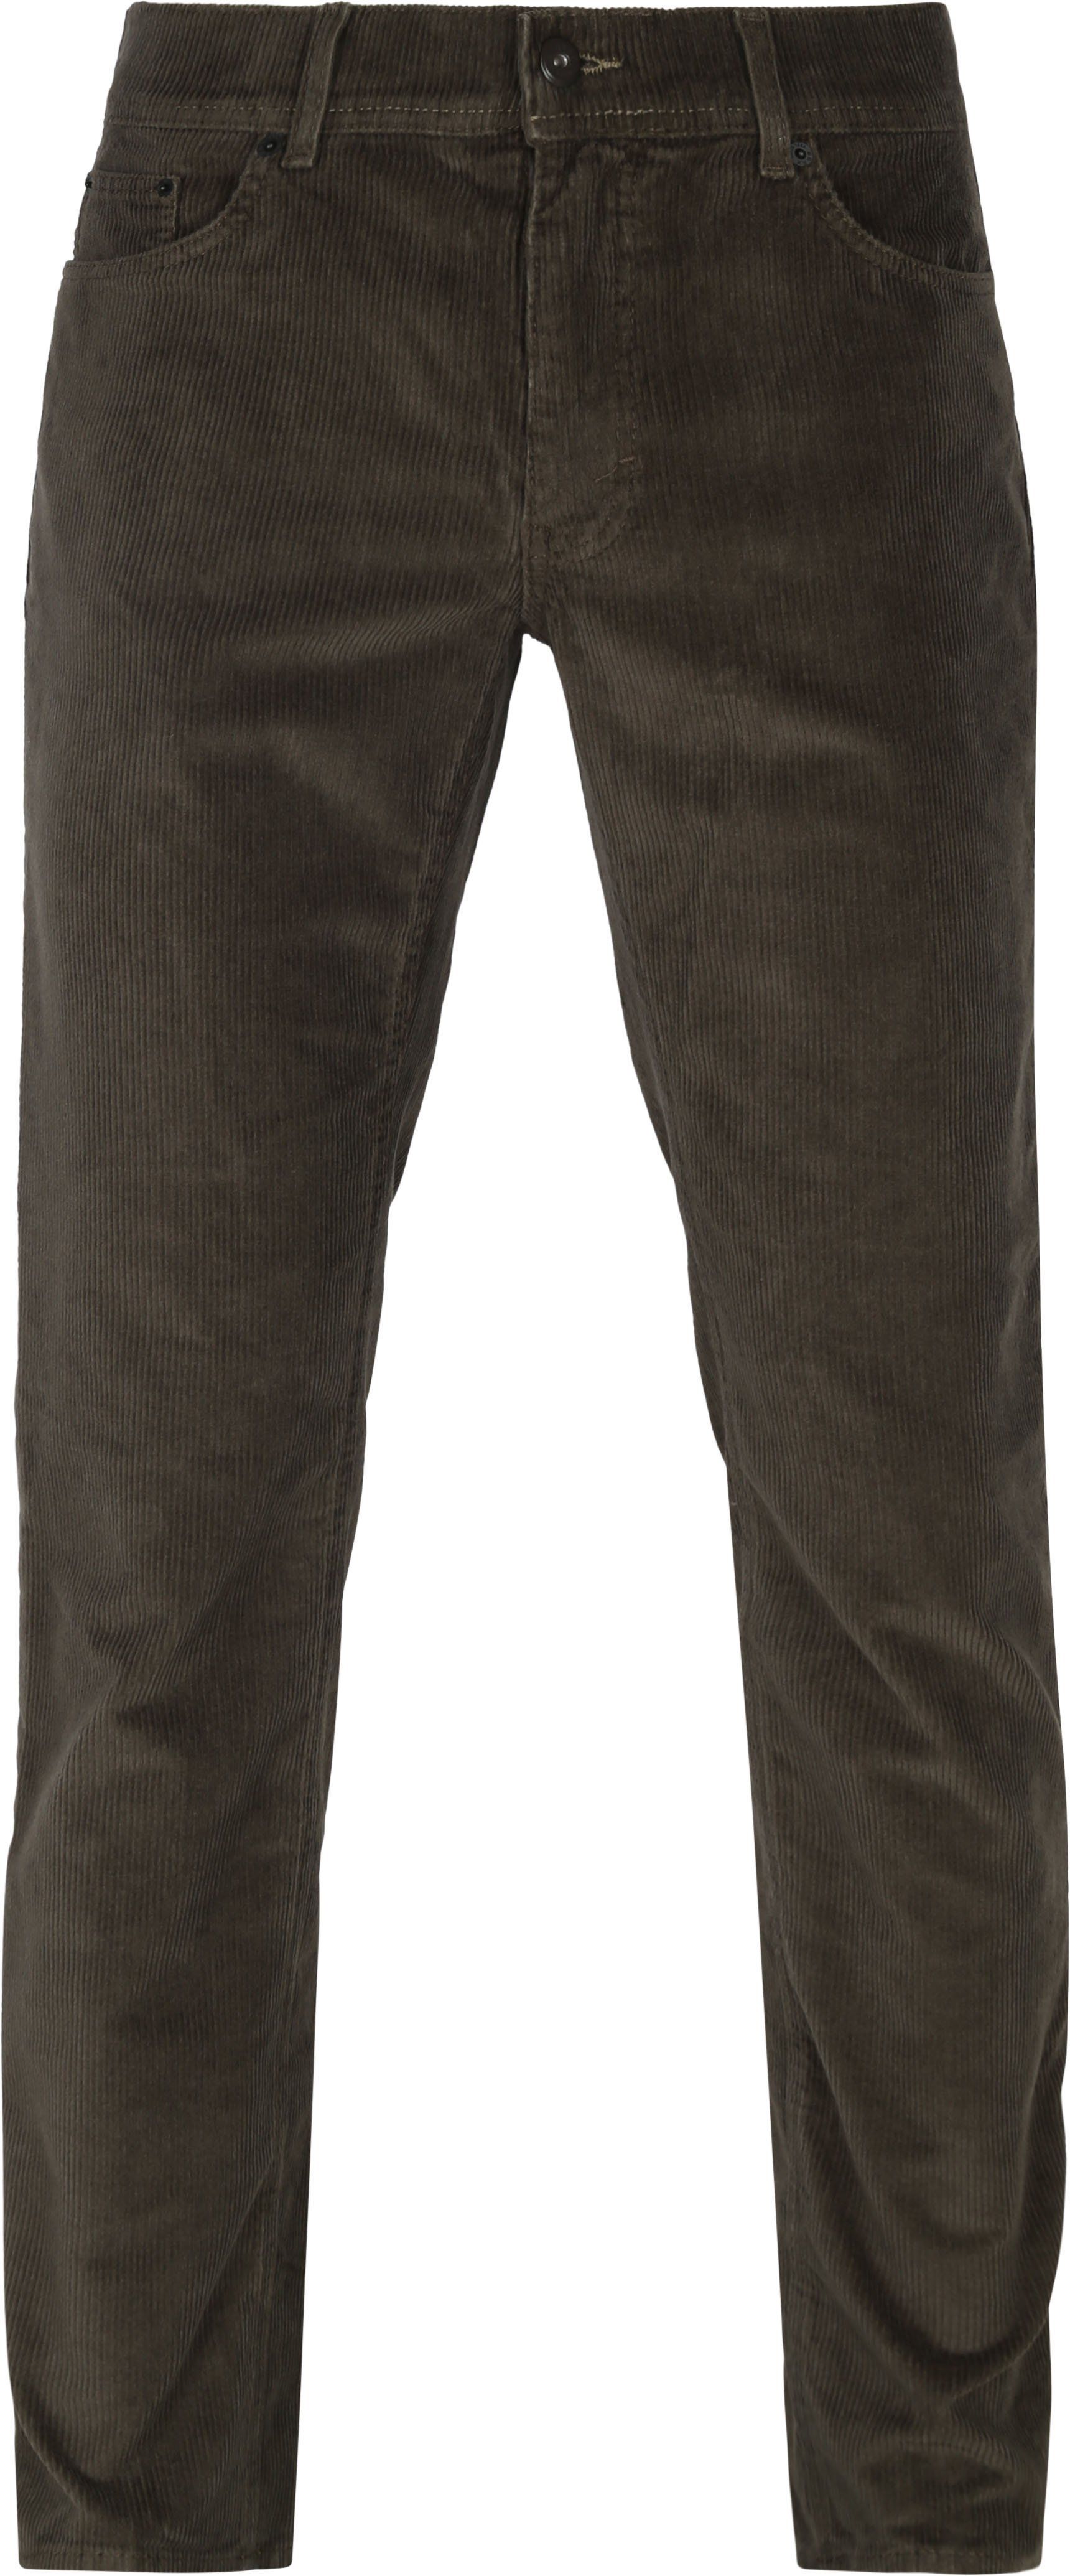 Brax Cooper Trousers Dark Corduroy Dark Green Green size W 40